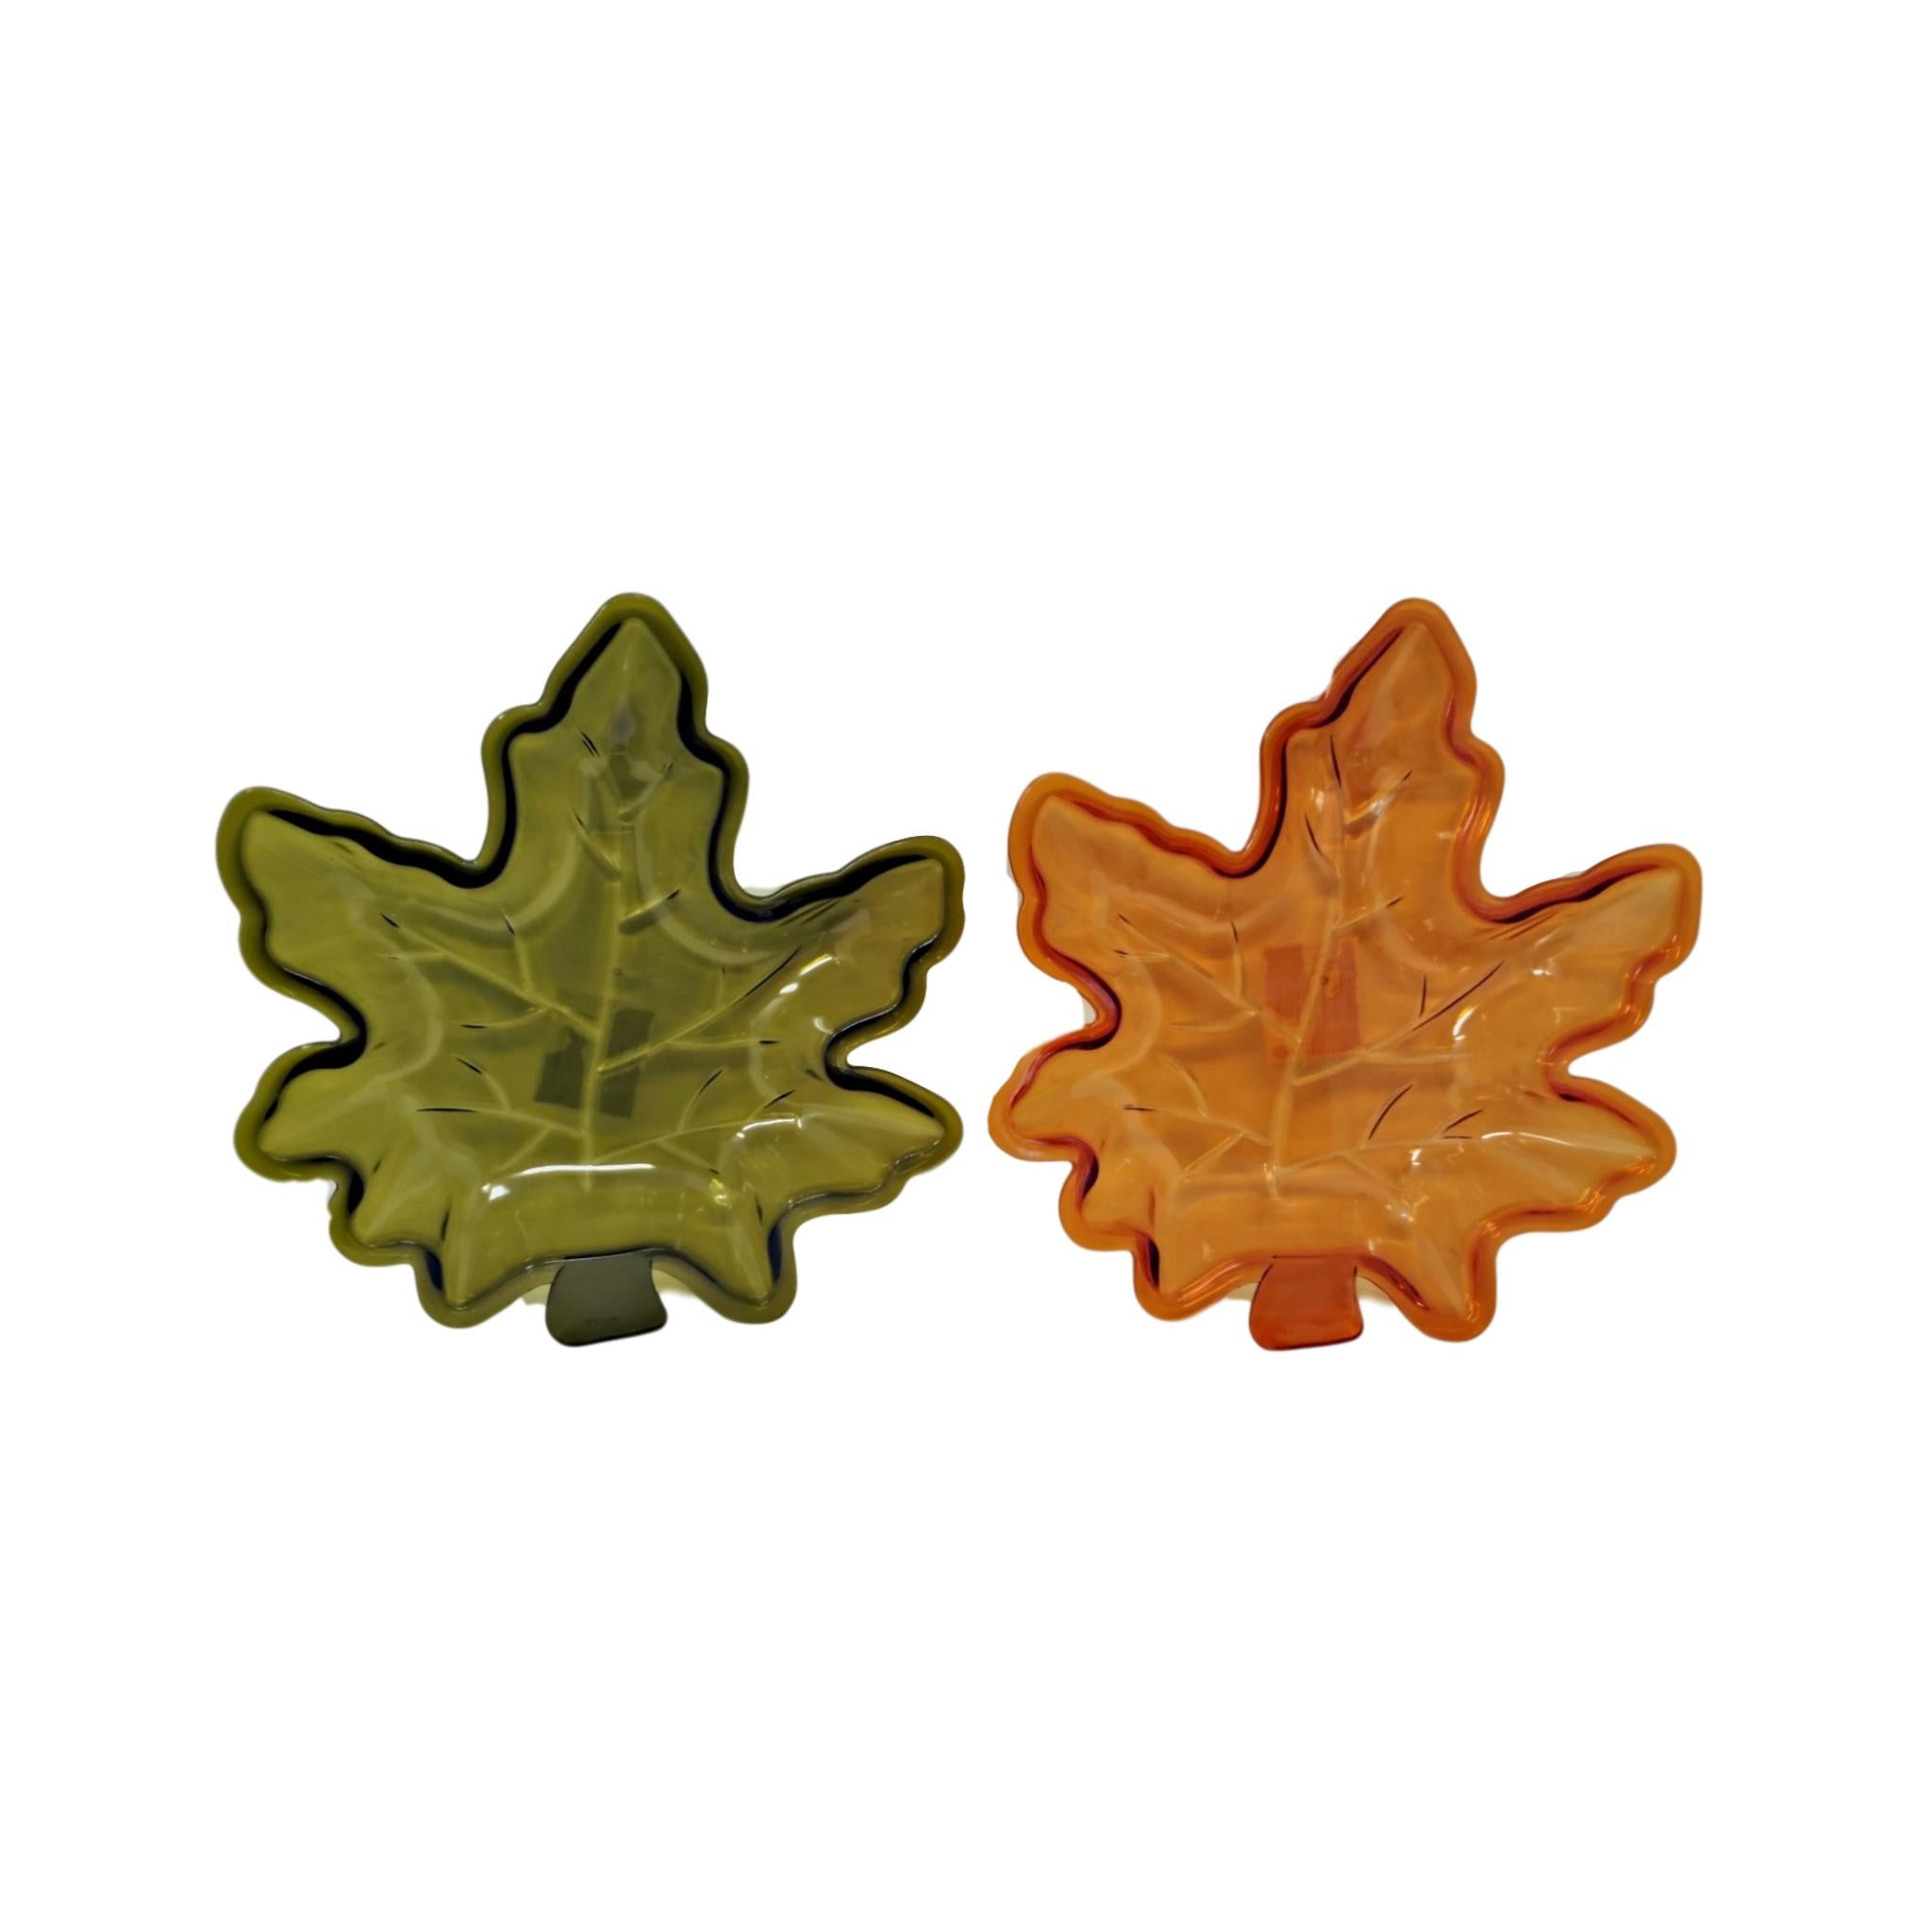 Fall Leaf Shaped Plastic Serving Dish Orange and Green – Set of 2